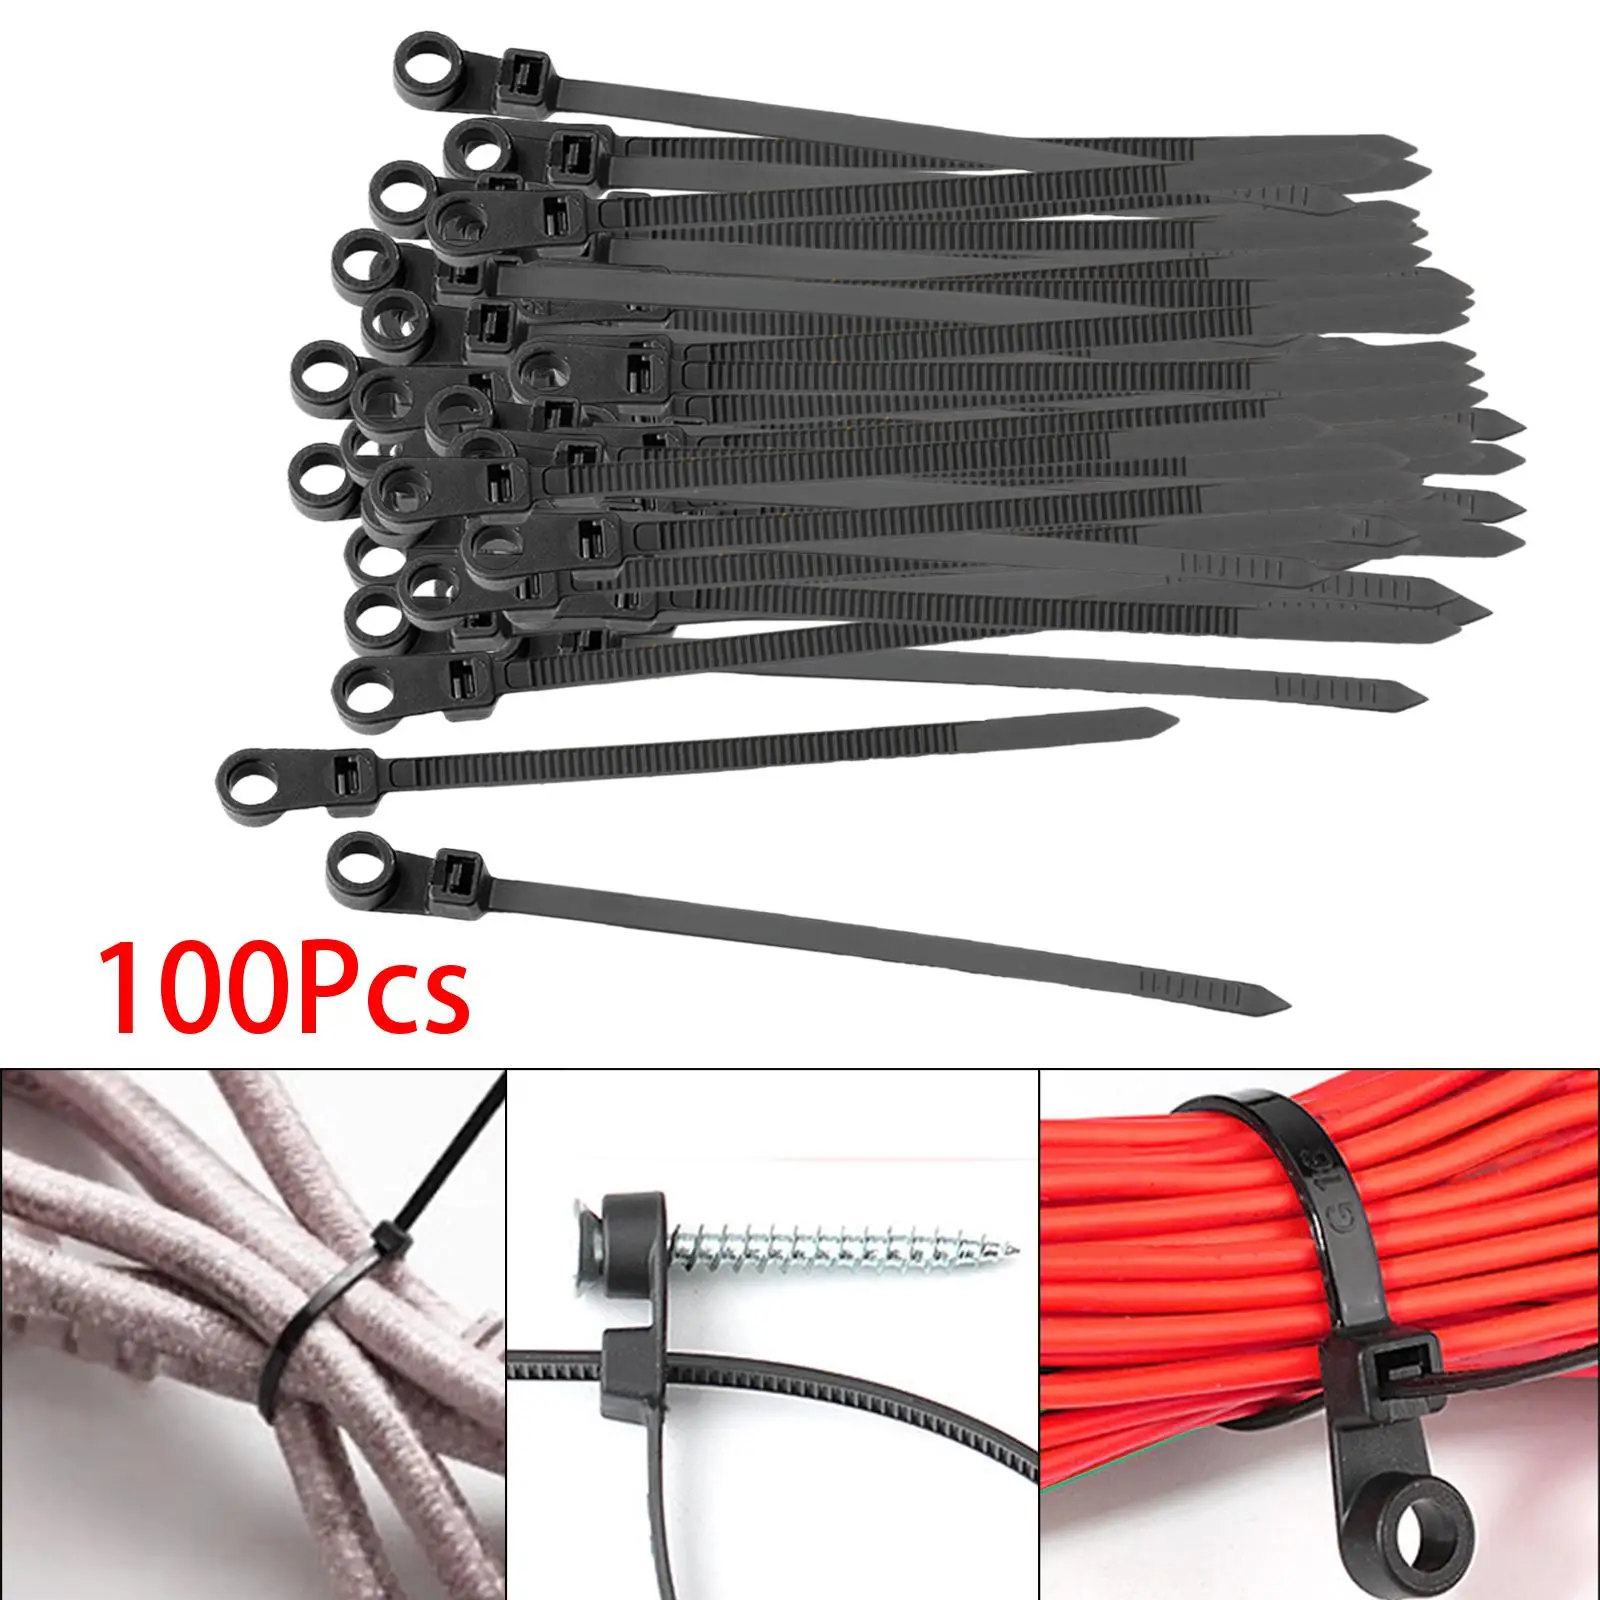 100 Pieces Nylon Cable Zips Wire Ties with Screw Hole Self Locking Tie Wraps for Office Garden Trellis Indoor Outdoor Workshop